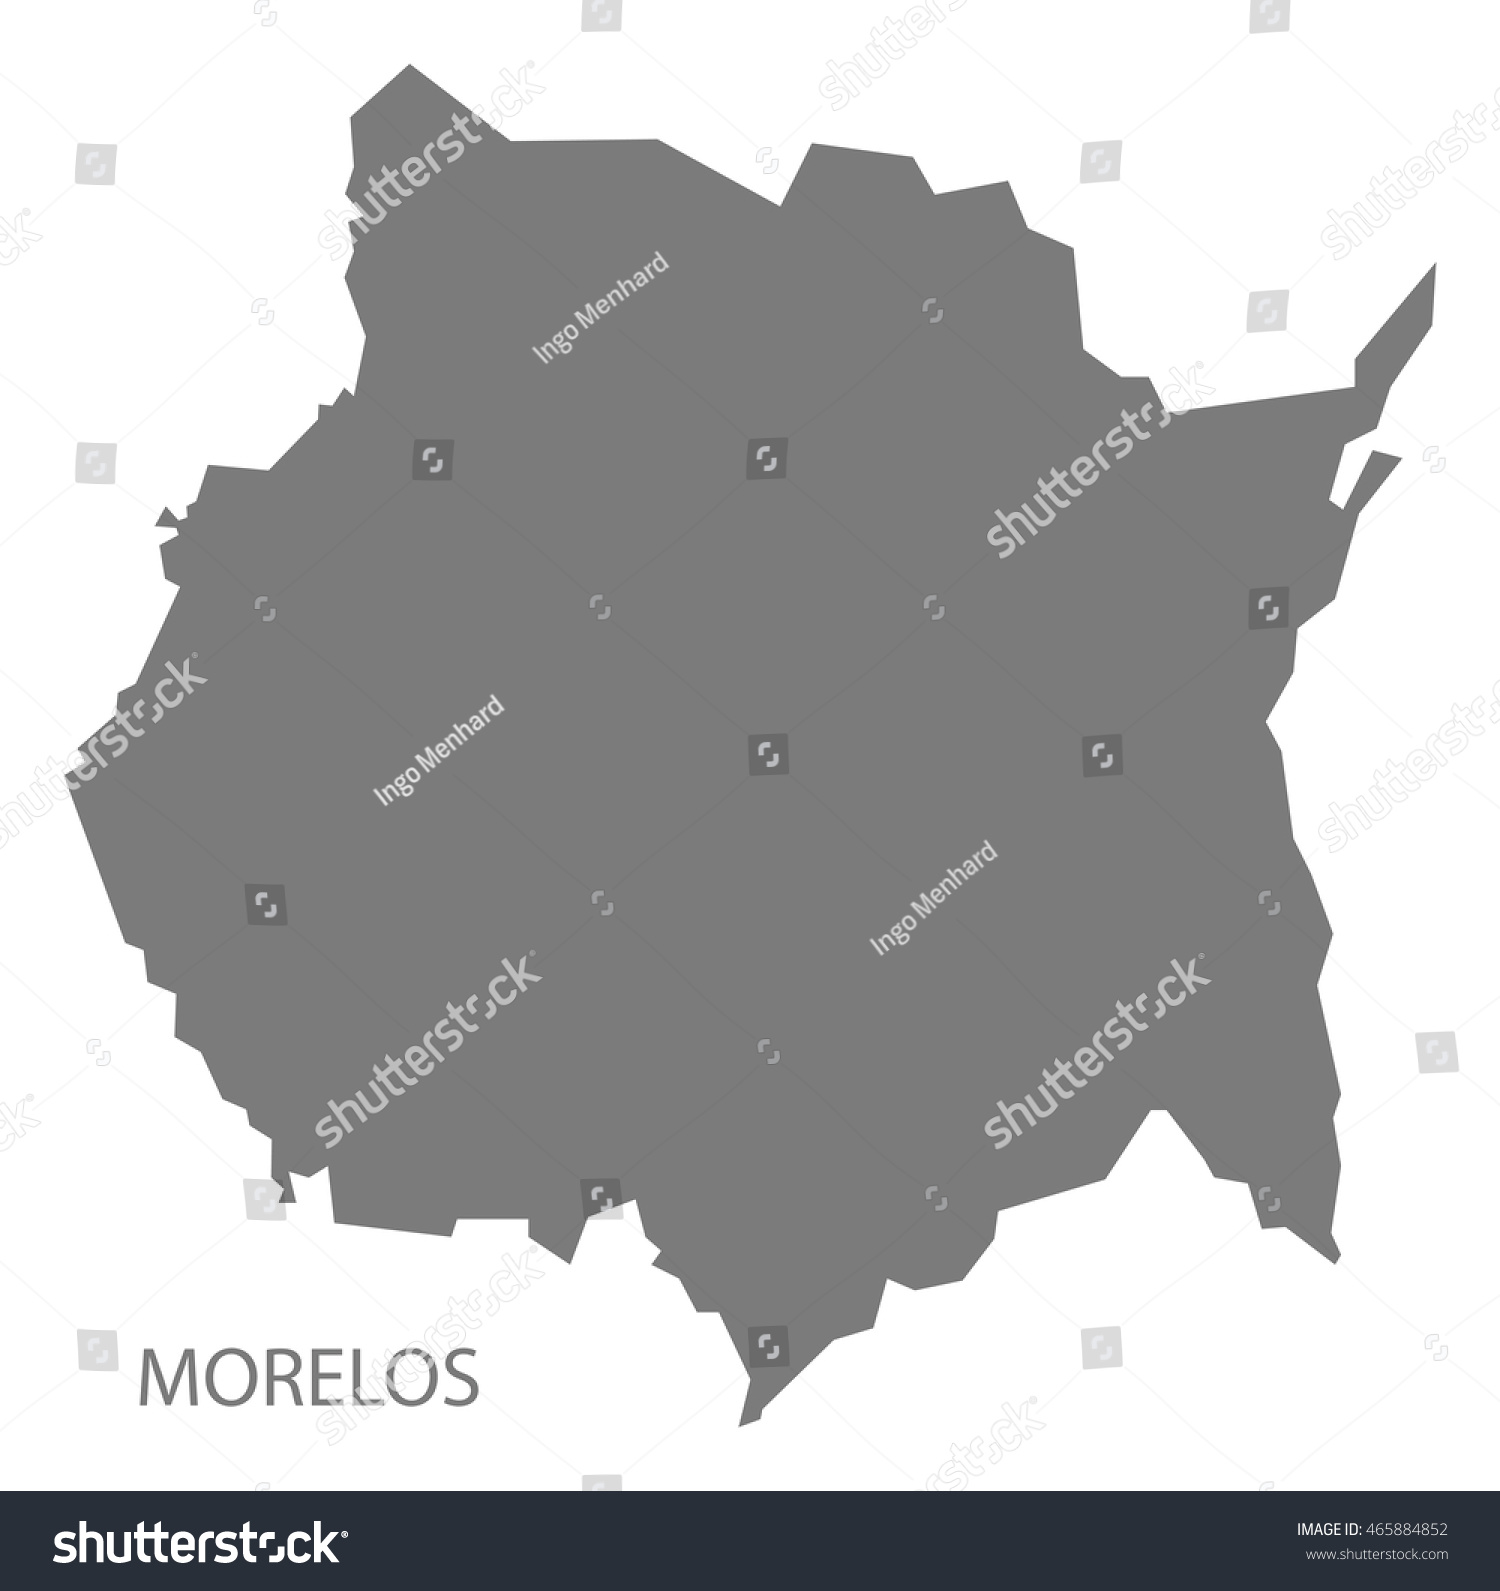 Morelos Mexico Map Grey Stock Vector Royalty Free 465884852 Shutterstock 3419